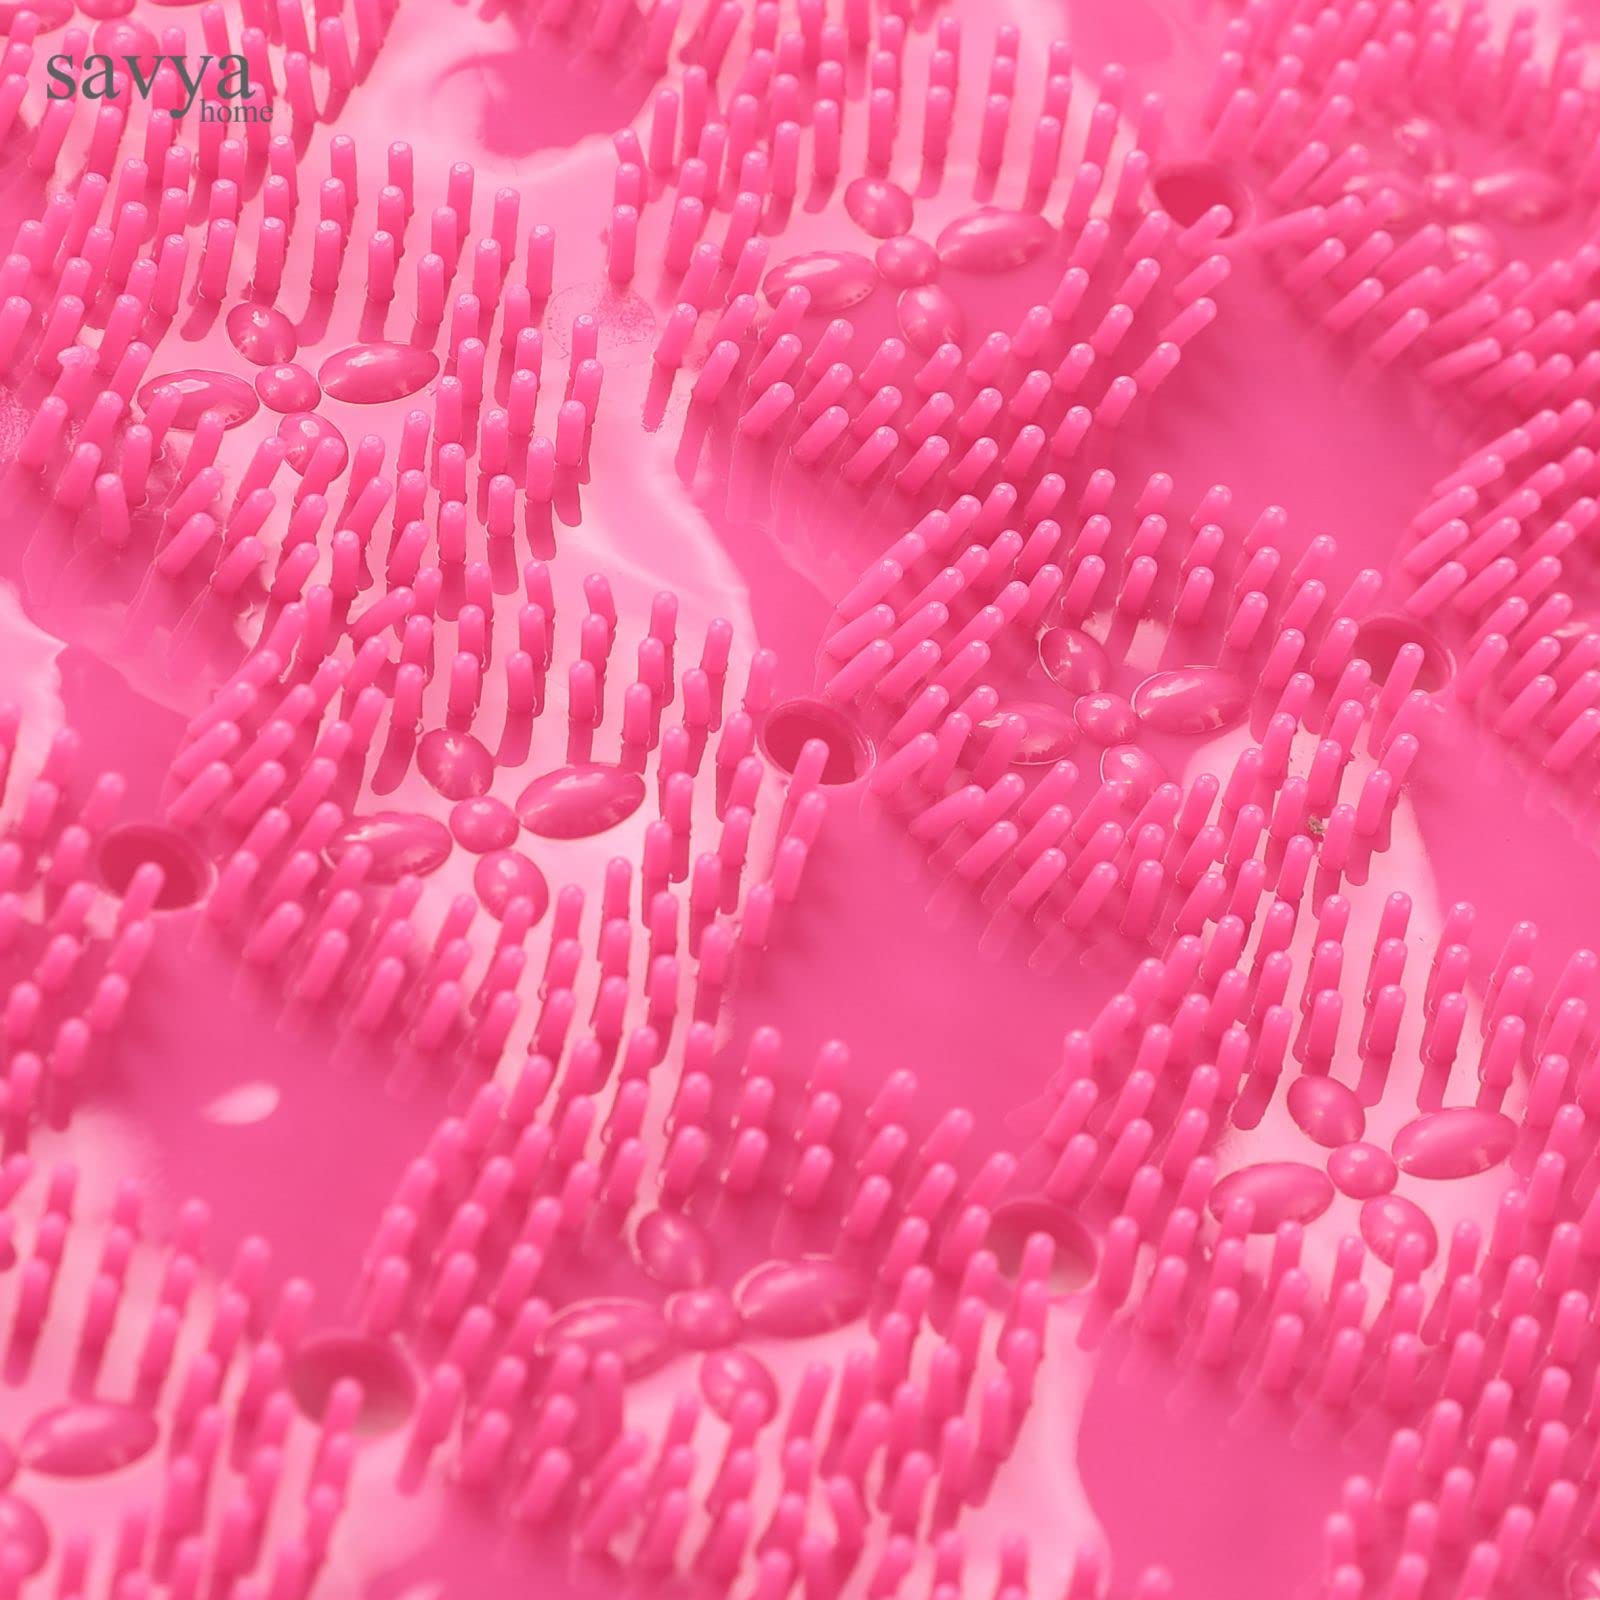 Savya Home Anti Skid Bath Mat for Bathroom, PVC Bath Mat with Suction Cup, Machine Washable Floor Mat (67x37 cm) (Pink)